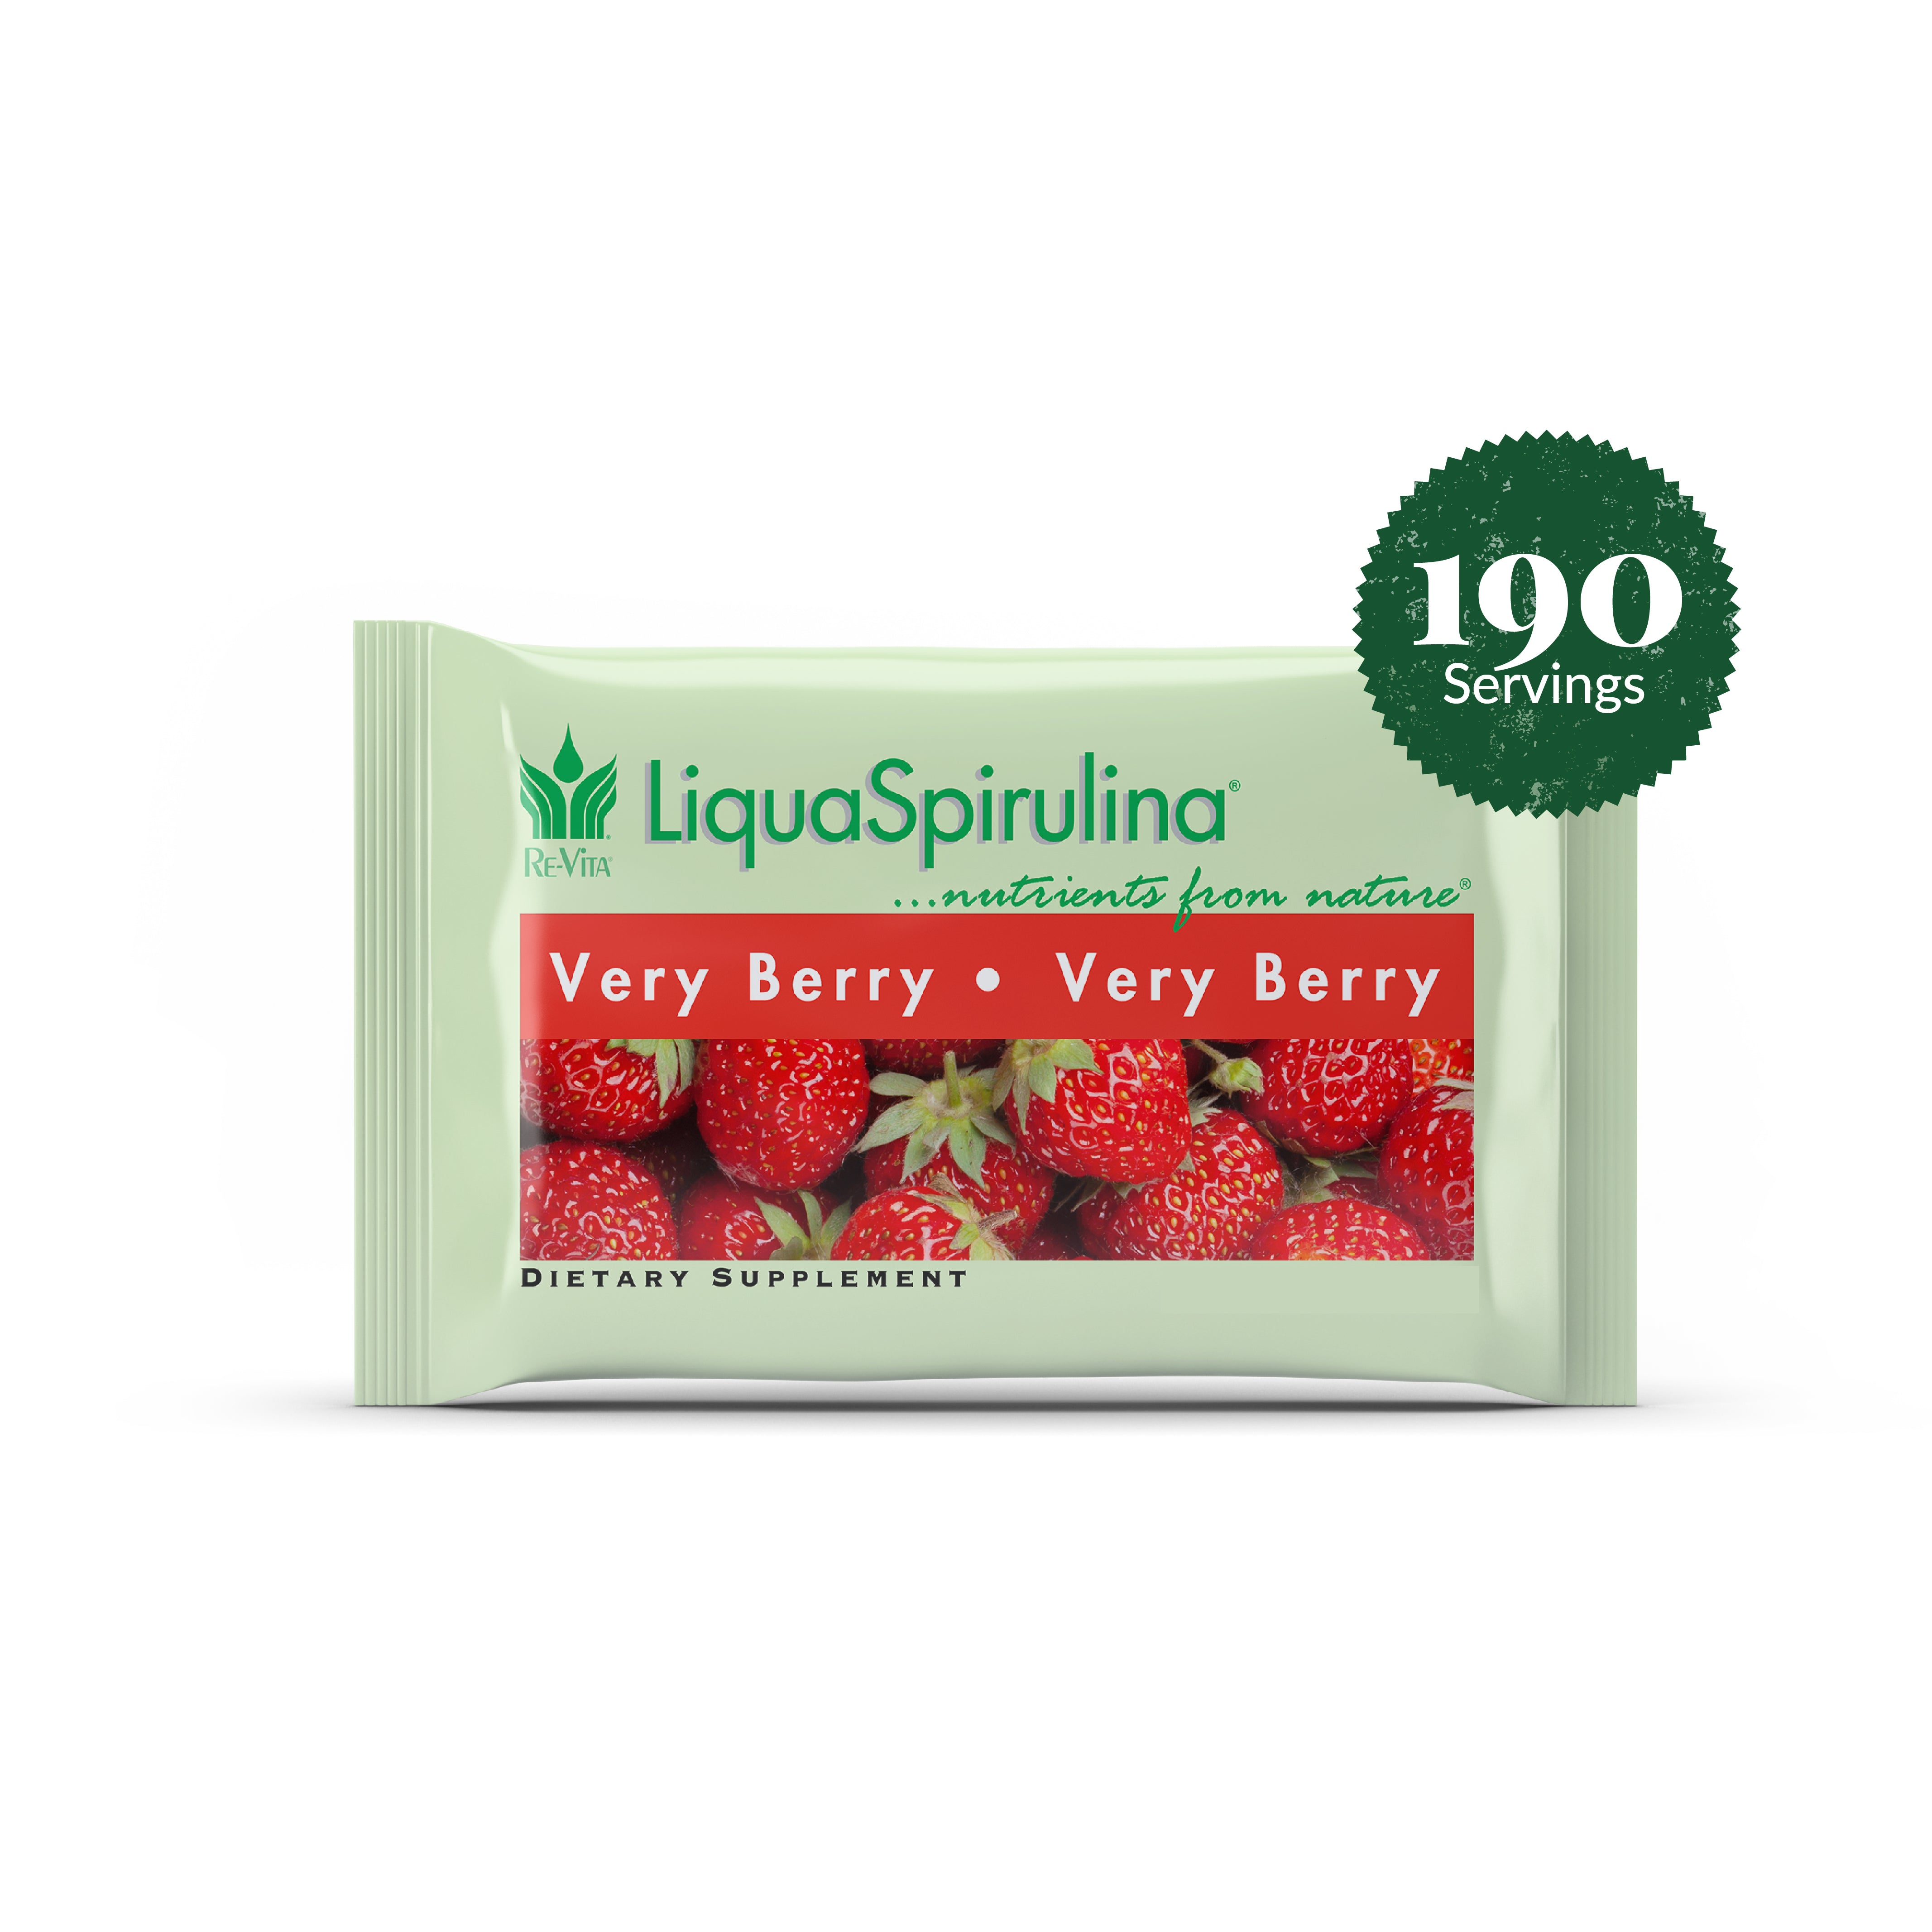 Very Berry Liqua Spirulina Smart Pack 190 Servings